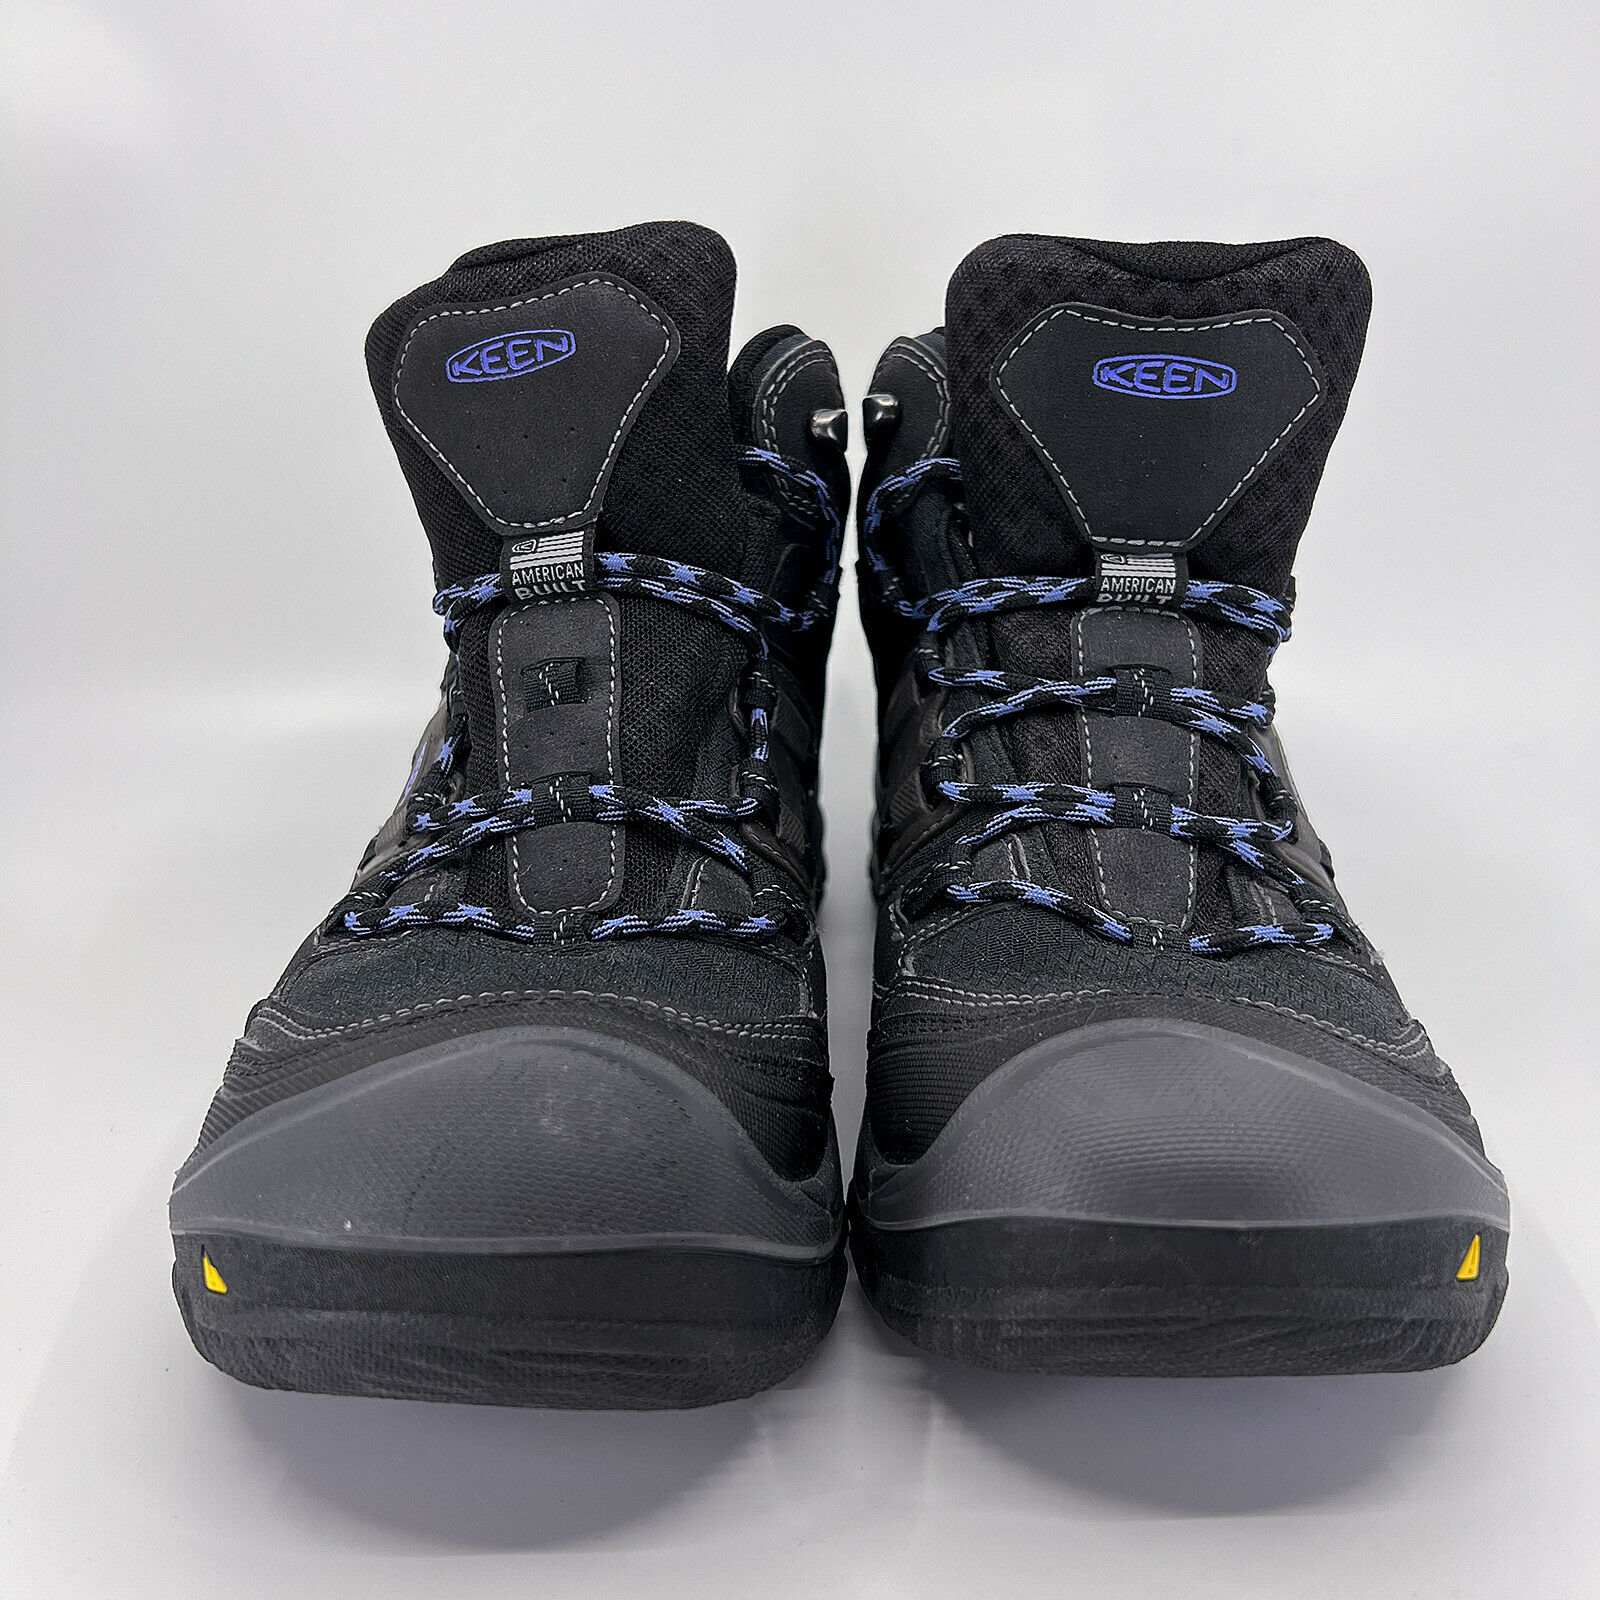 KEEN Logan Mid WP Waterproof Hiking Boots Black Women's Size 10